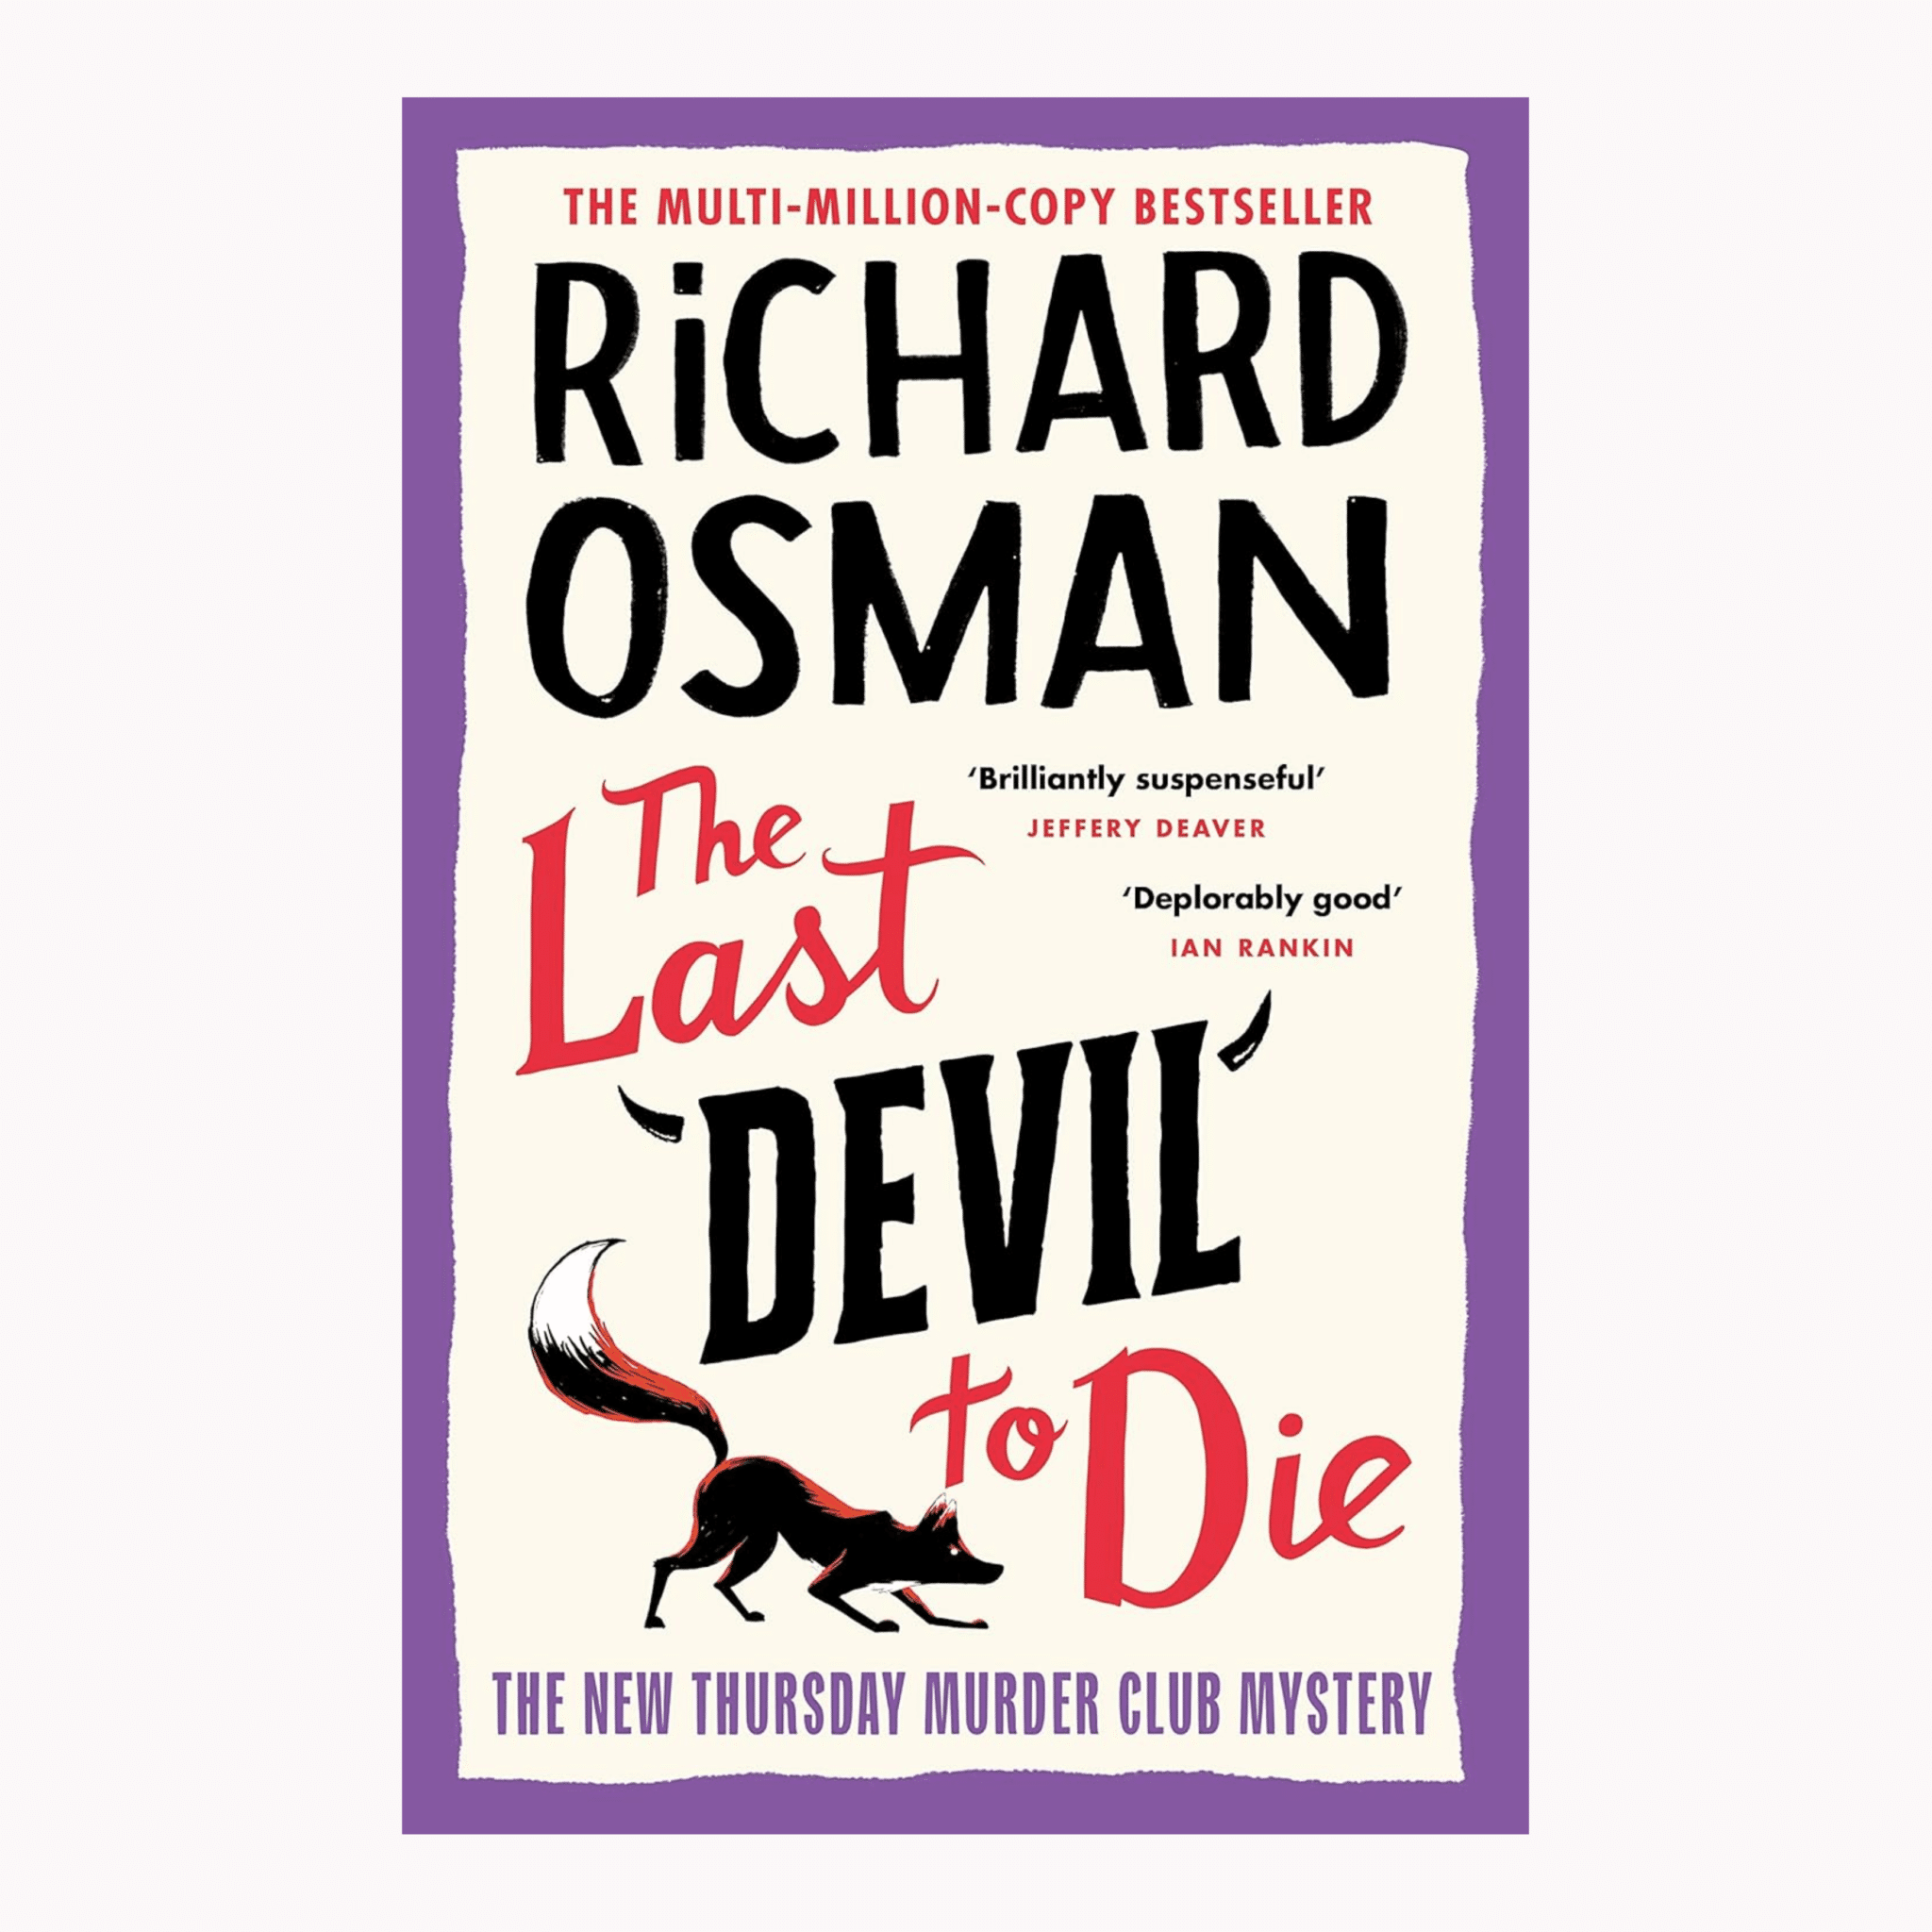 The Last Devil To Die by Richard Osman